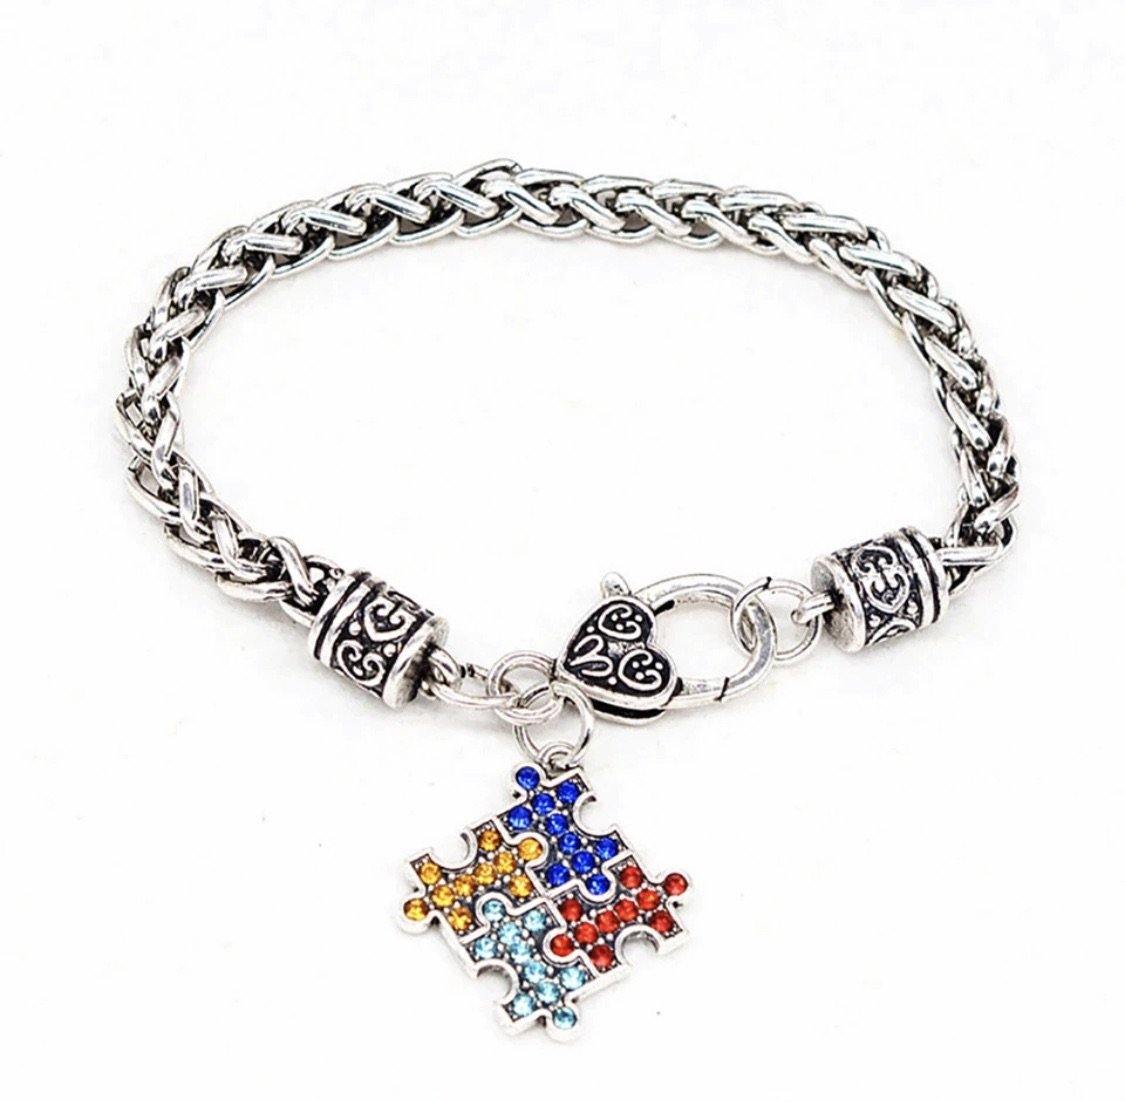 Autism awareness Unity Puzzle Script Pulley Bracelet Very nice | eBay